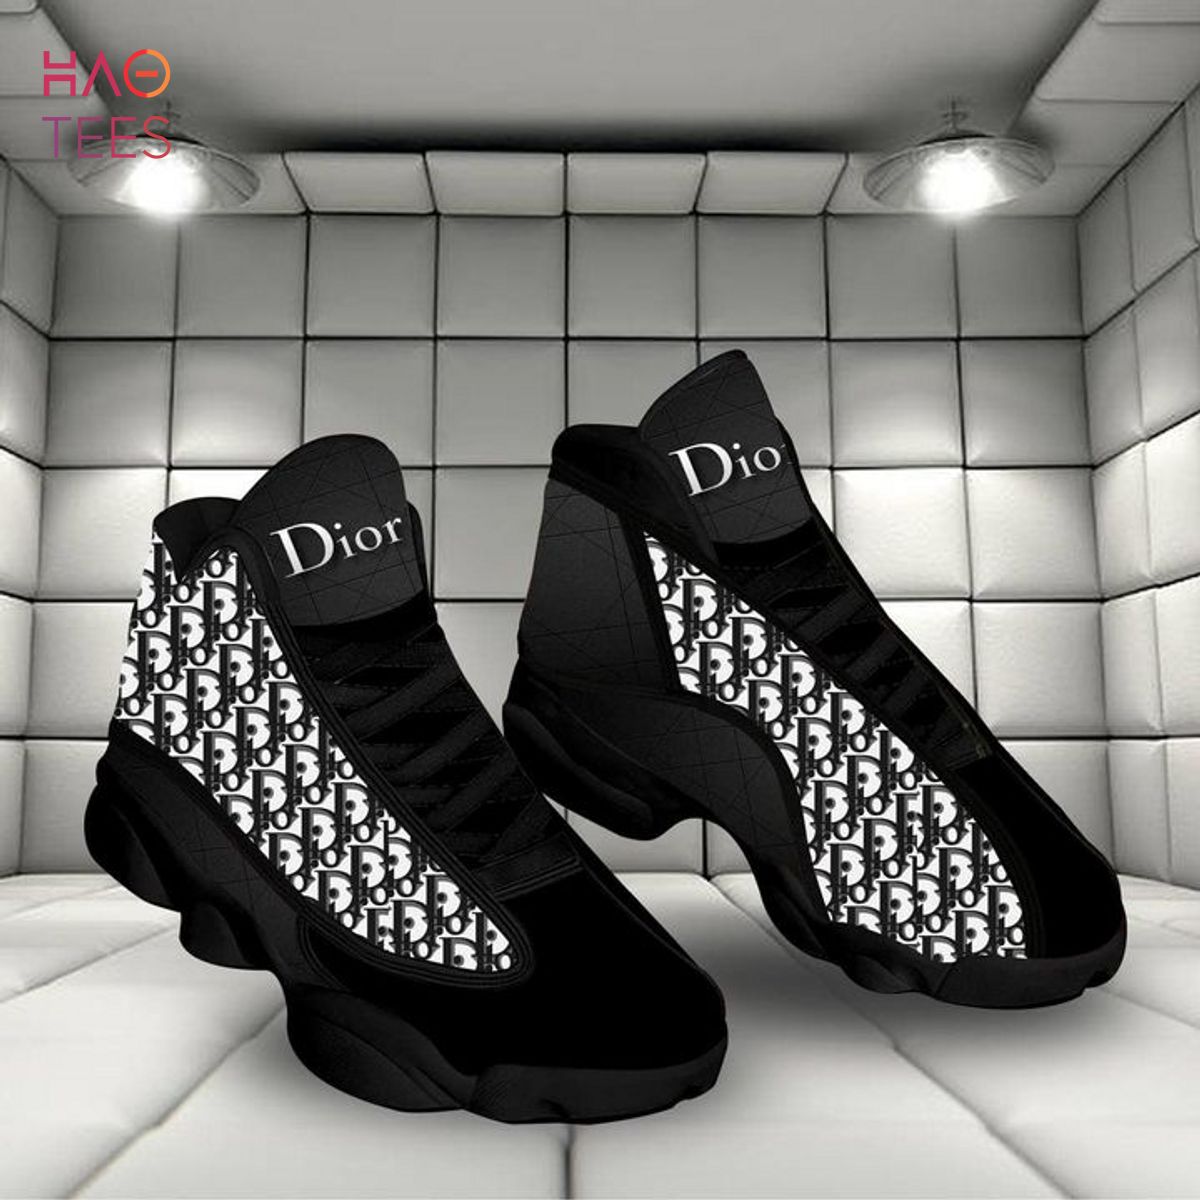 Dior Air Jordan 13 High Top Shoes